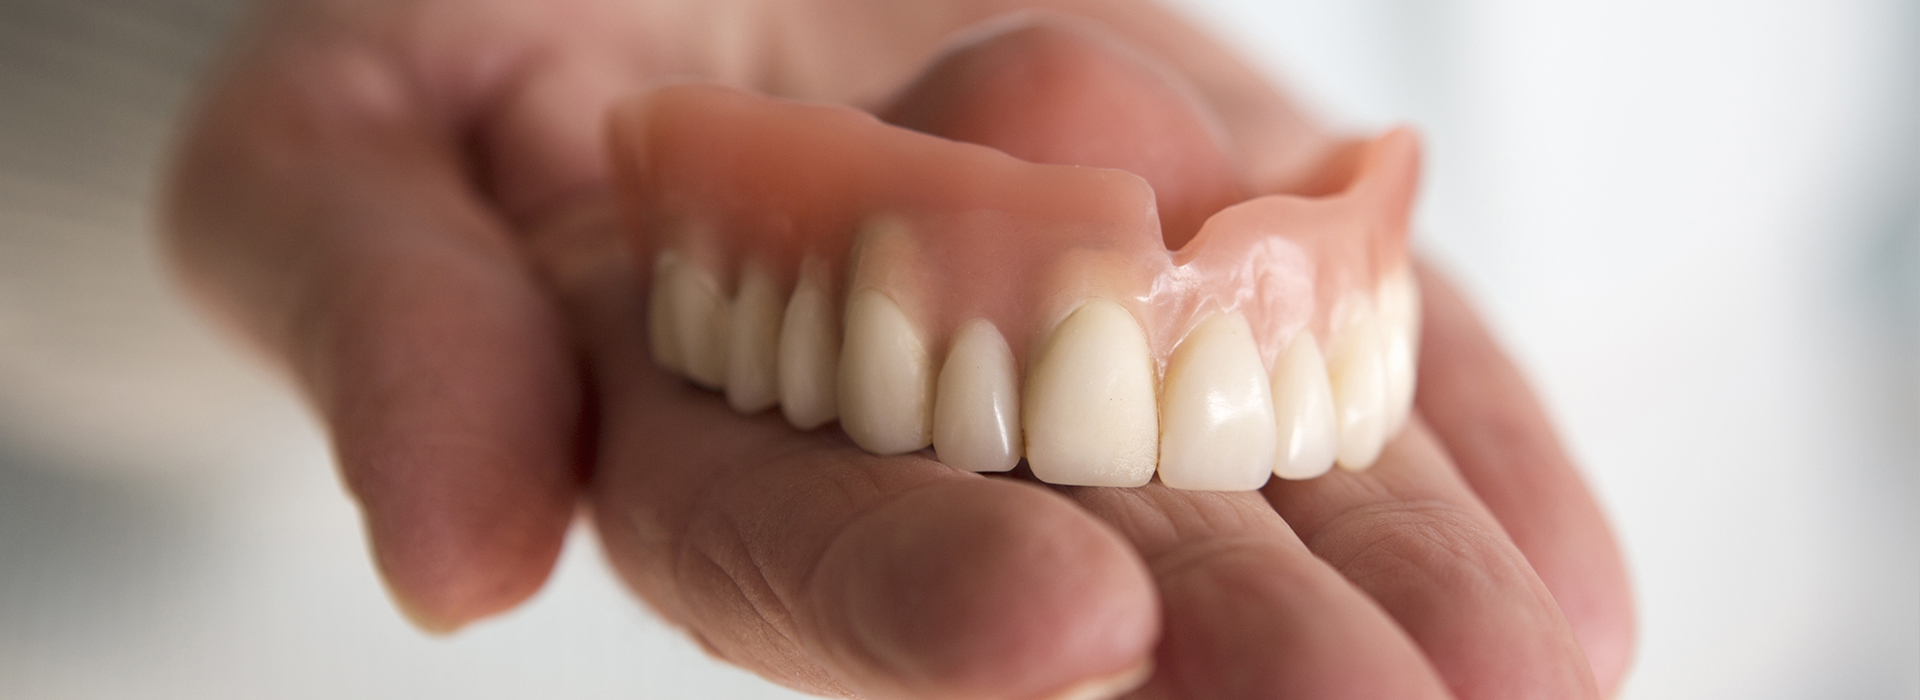 1Smile Dental | Teeth Whitening, Sleep Apnea and Ceramic Crowns